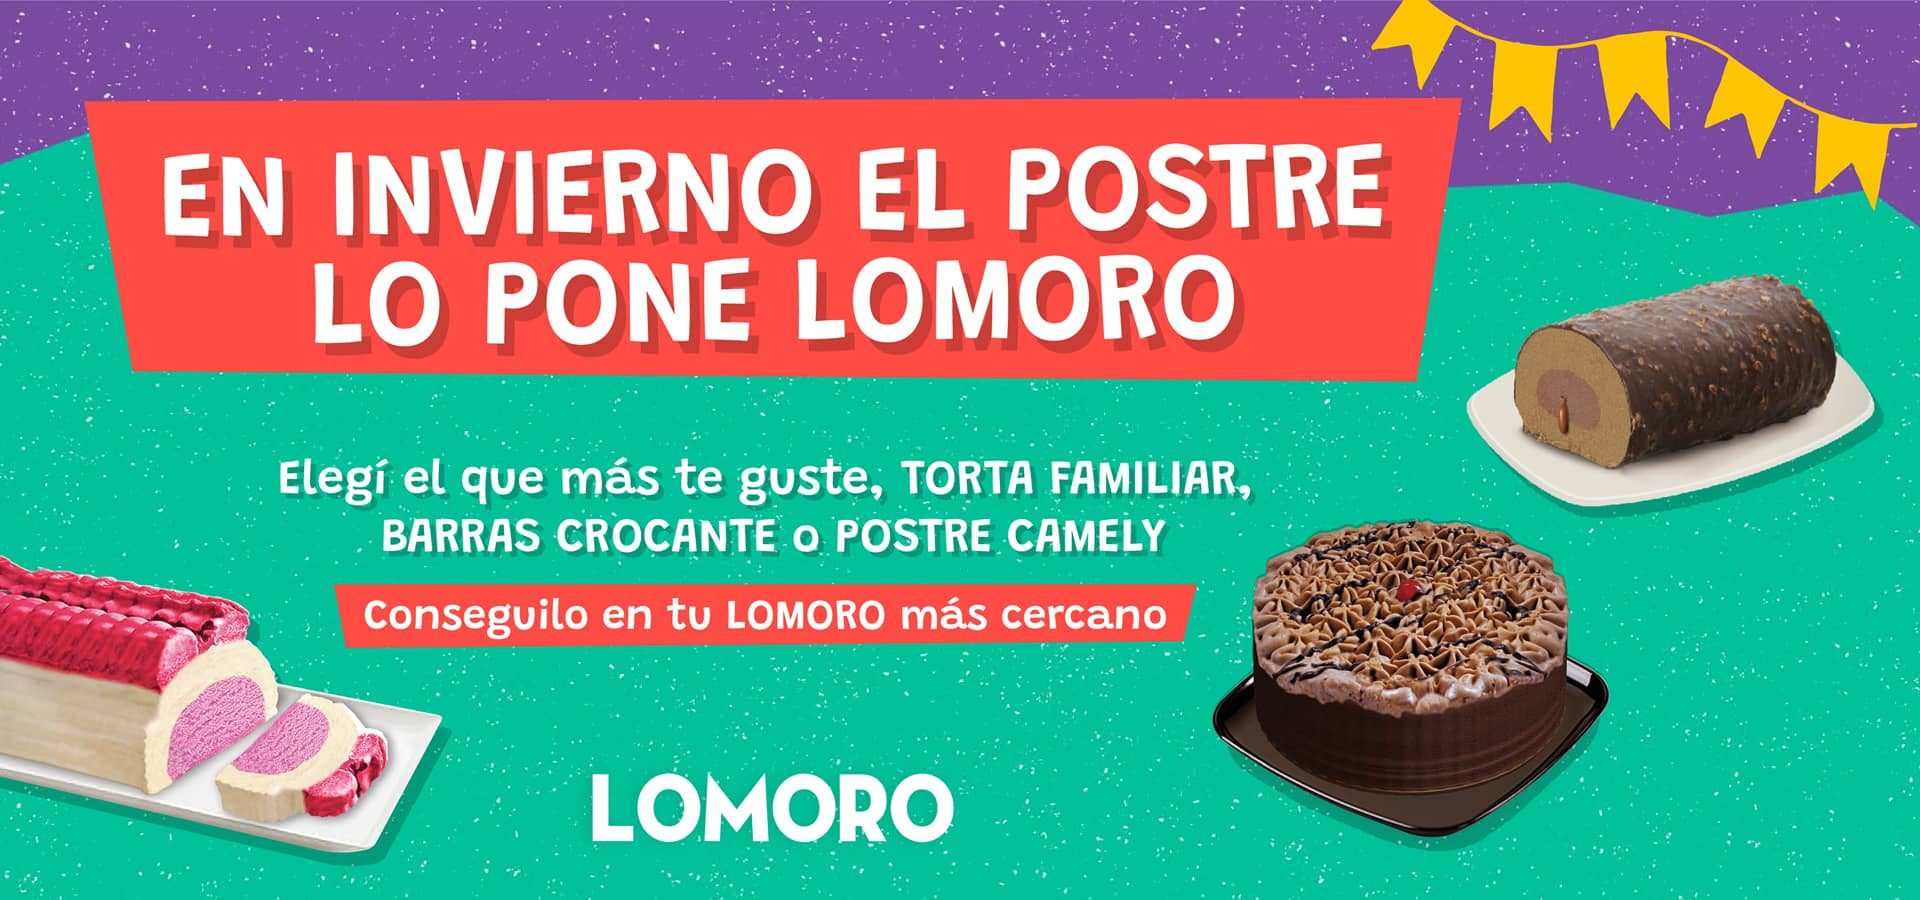 Lomoro900x1920